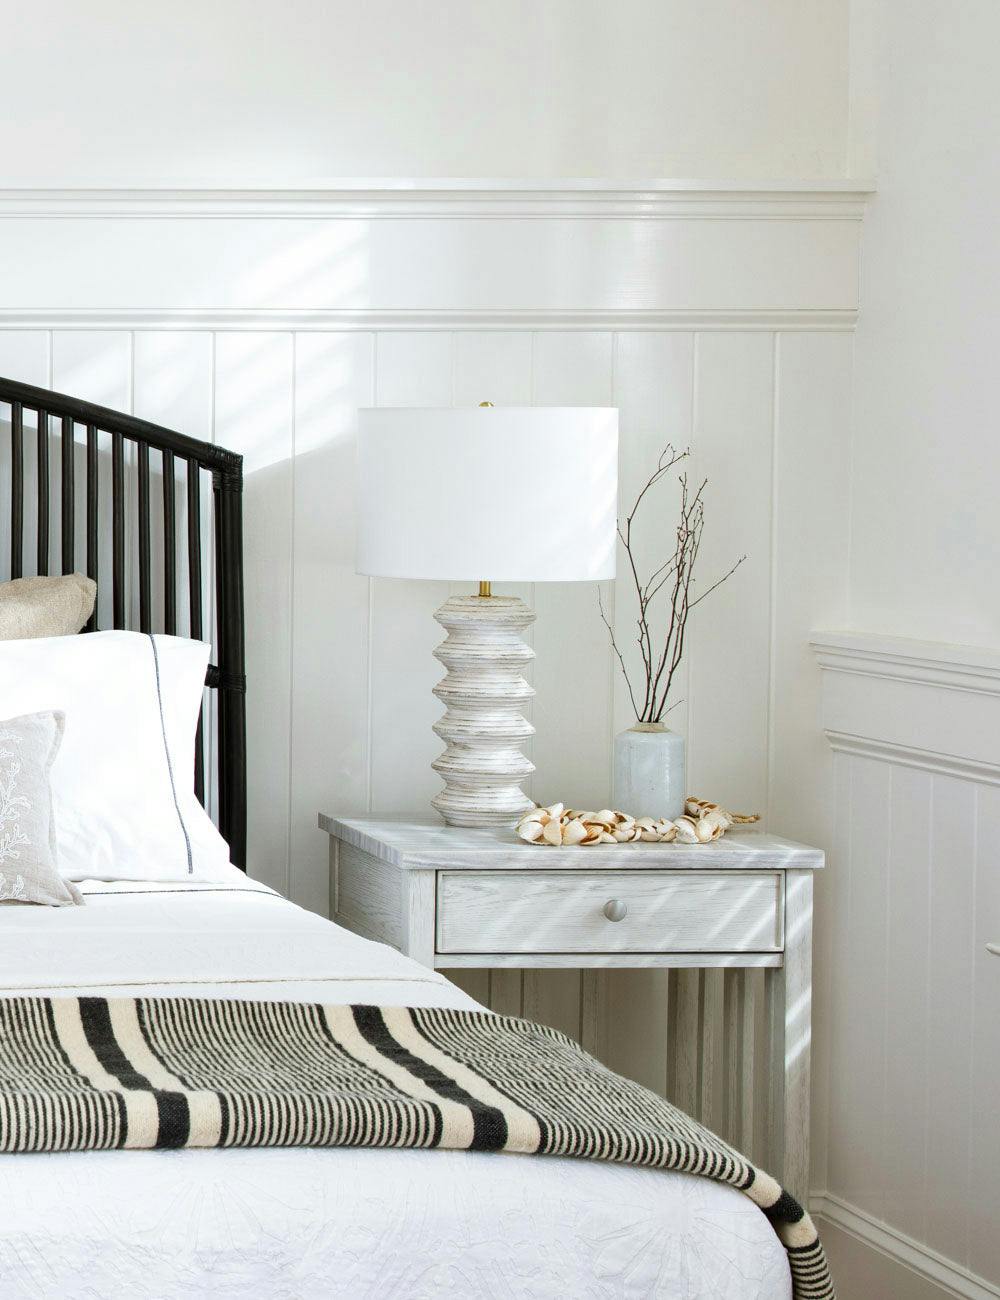 Nova Coastal-Inspired White Wood & Brass Table Lamp with Linen Shade